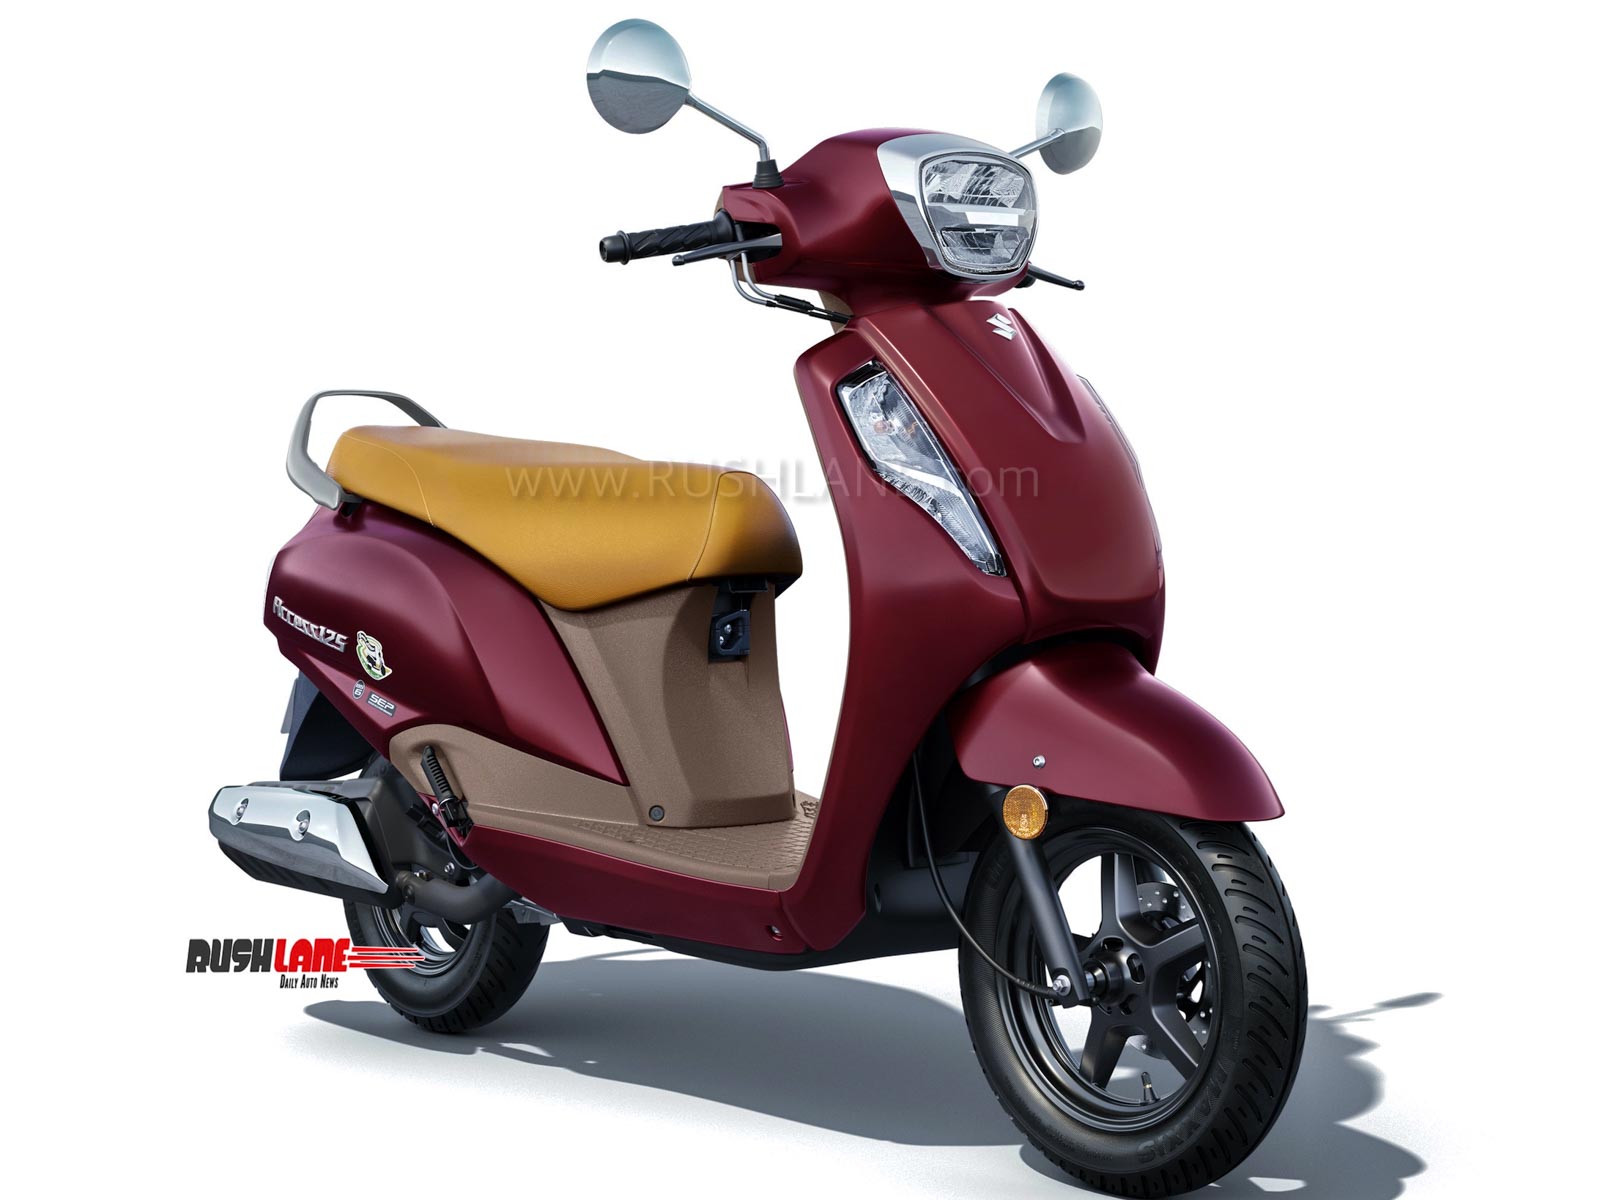 Suzuki Activa New Model Price